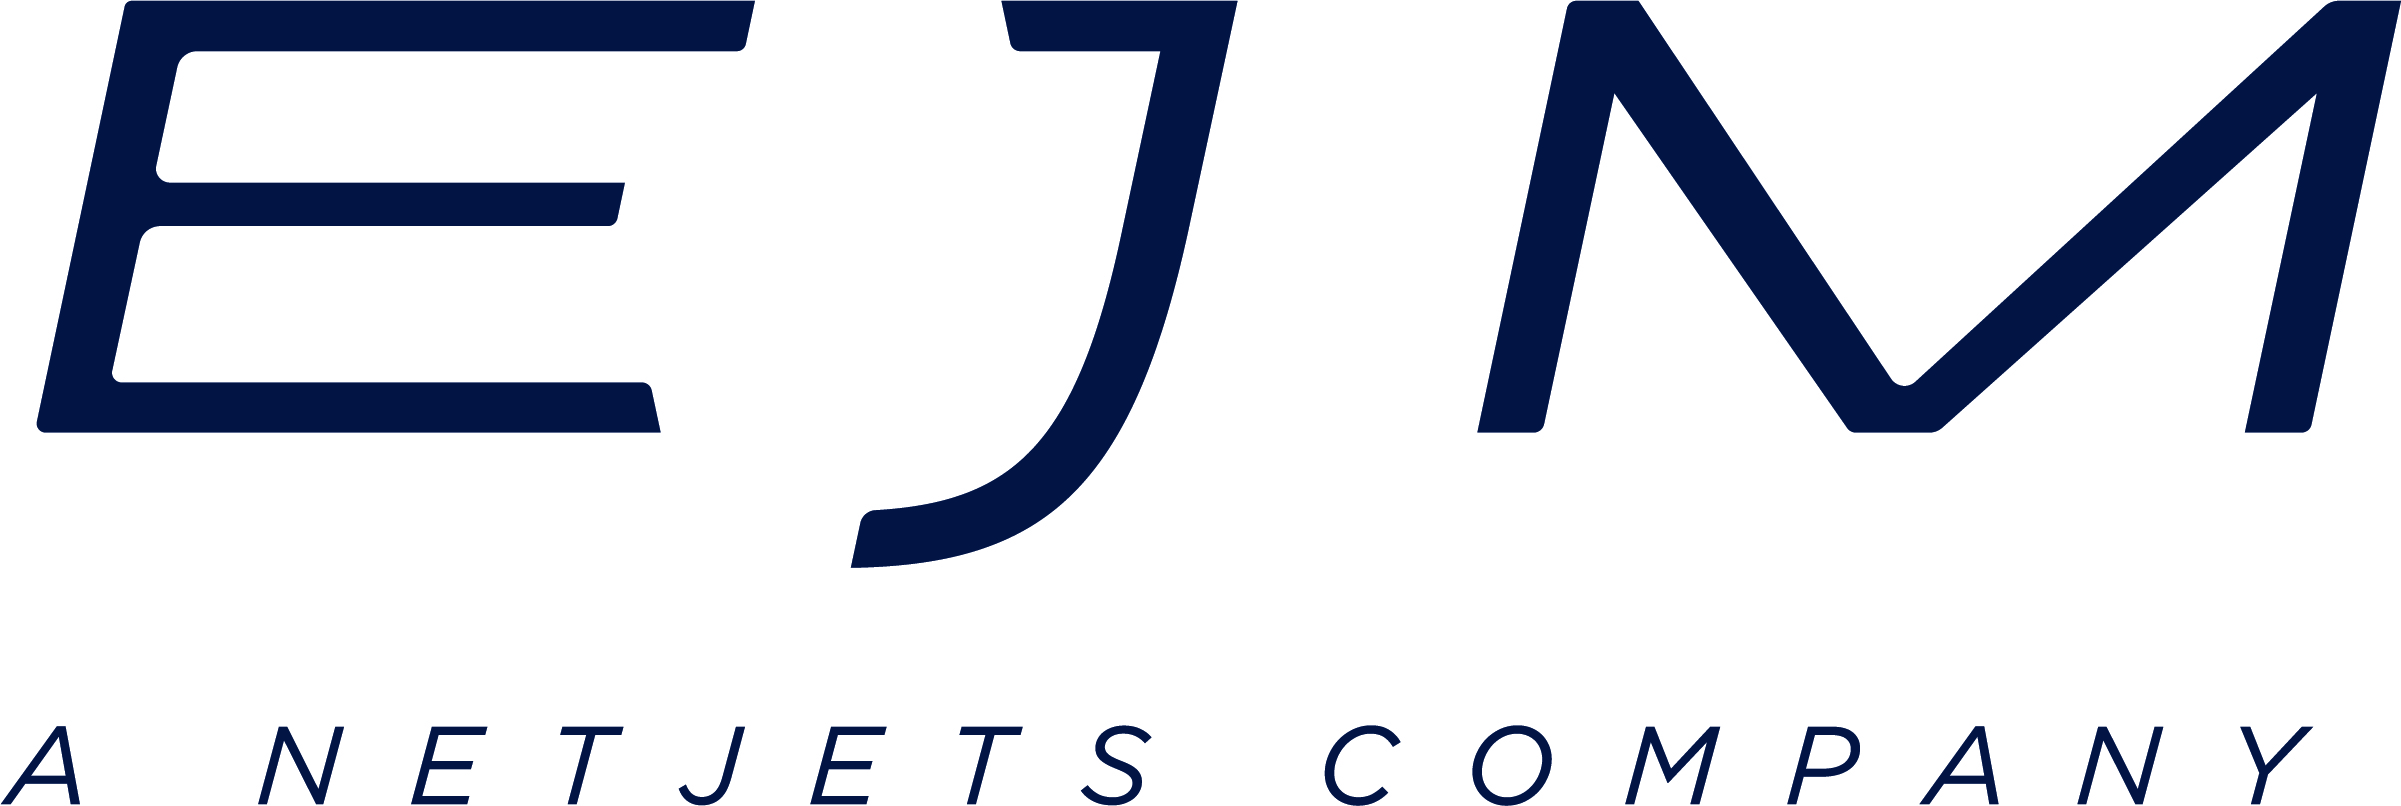 EJM logo